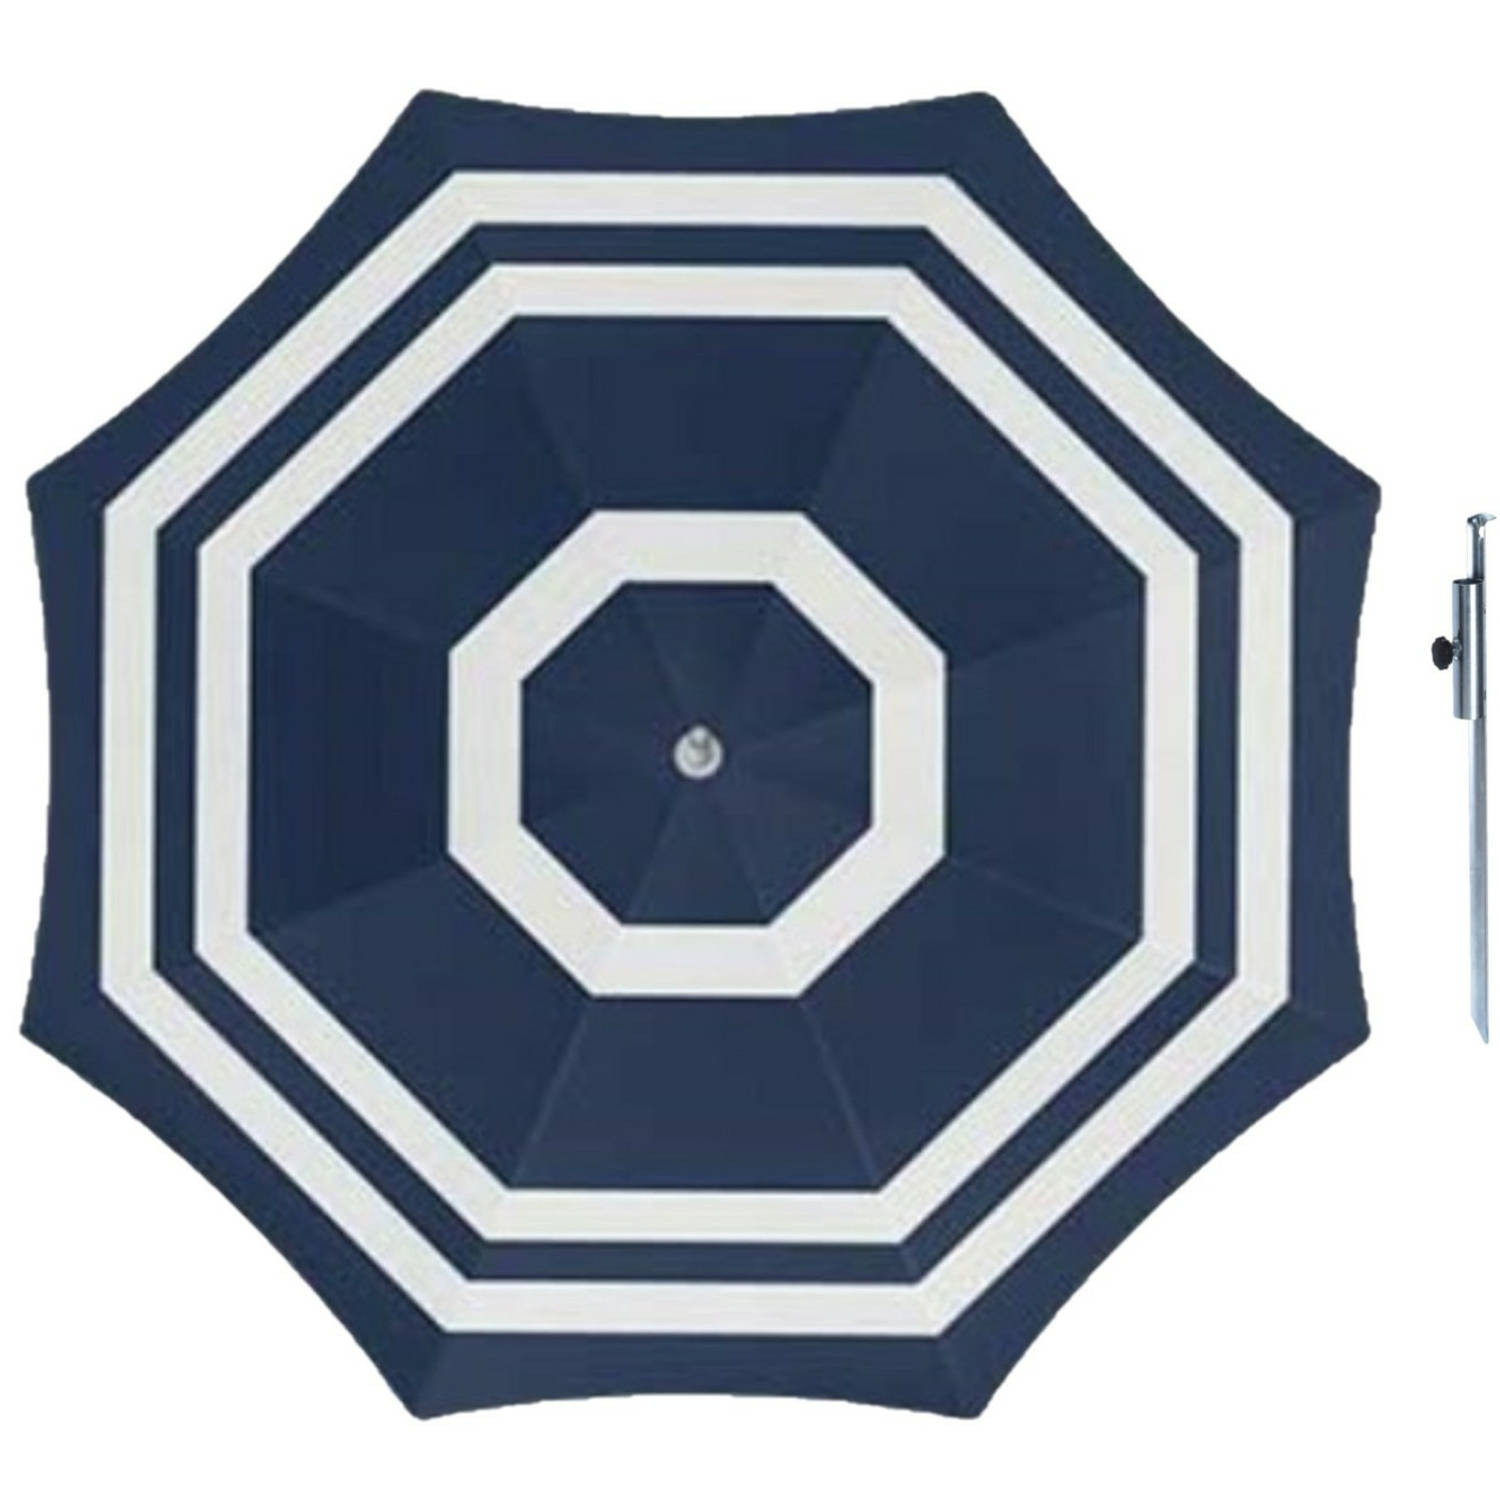 Parasol - Blauw/wit - D120 cm - incl. draagtas - parasolharing - 49 cm - Parasols